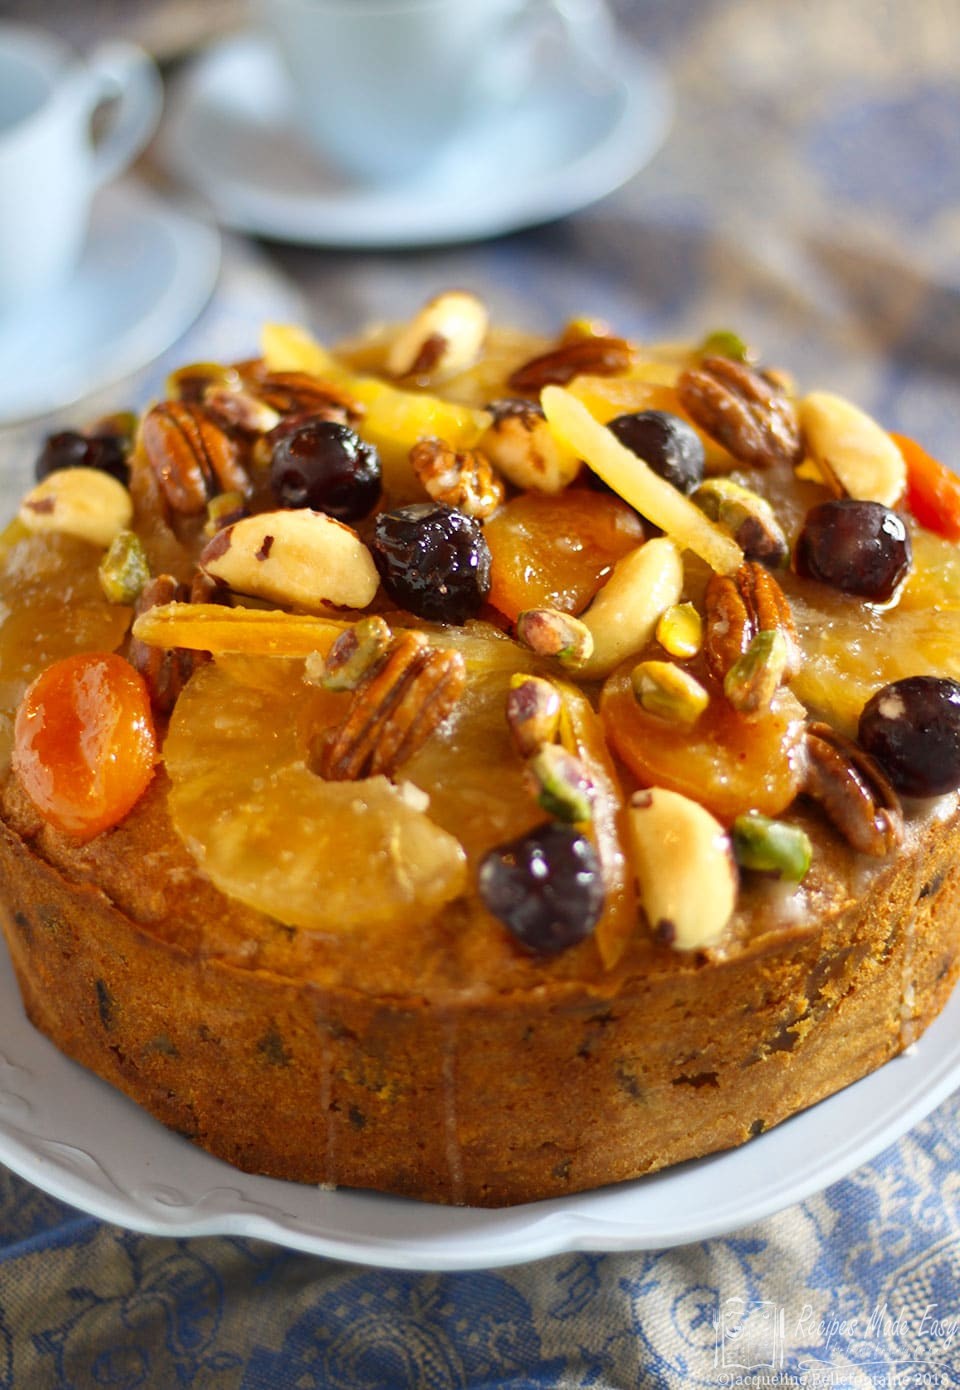 Special fruit and nut cake. Recipes made easy.